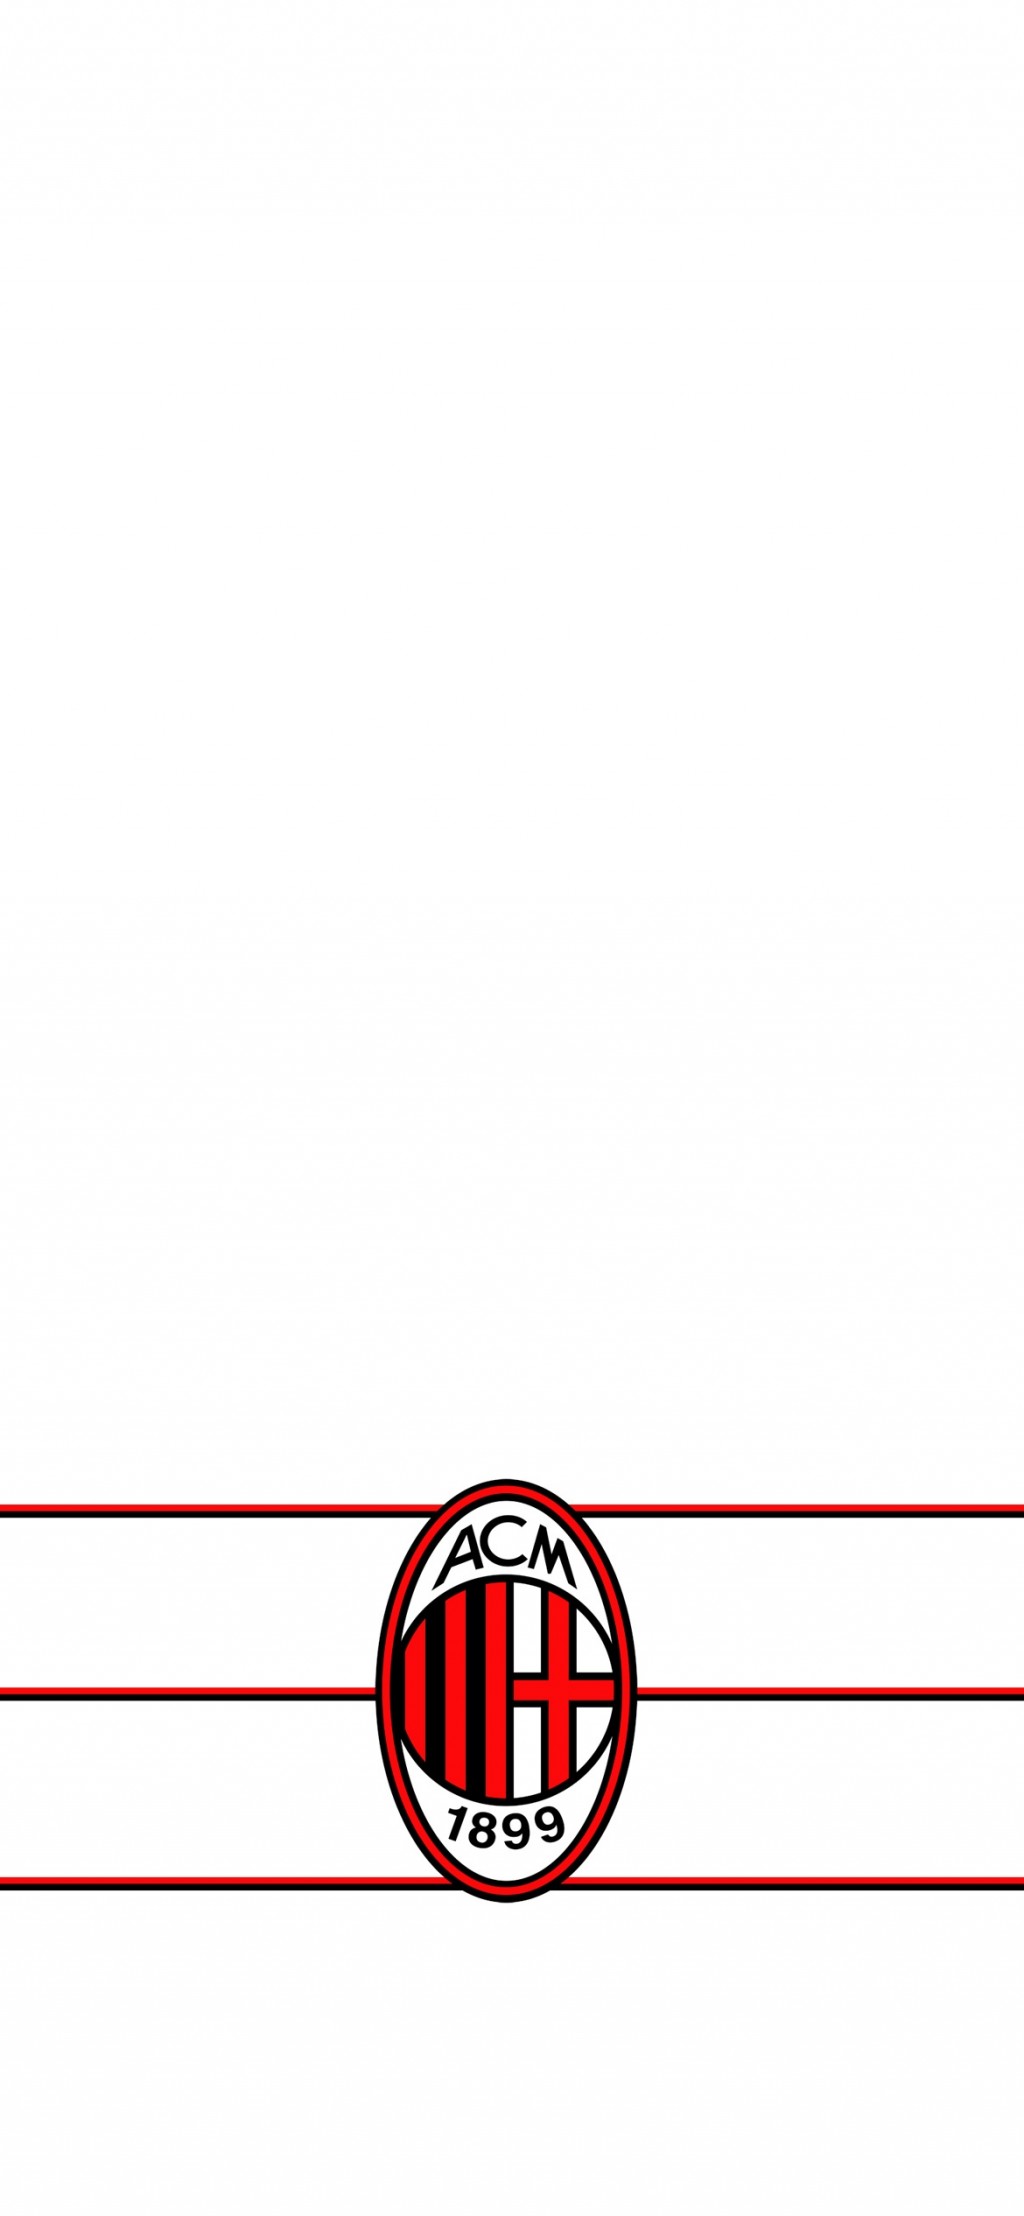 AC米兰足球俱乐部Logo简约手机壁纸